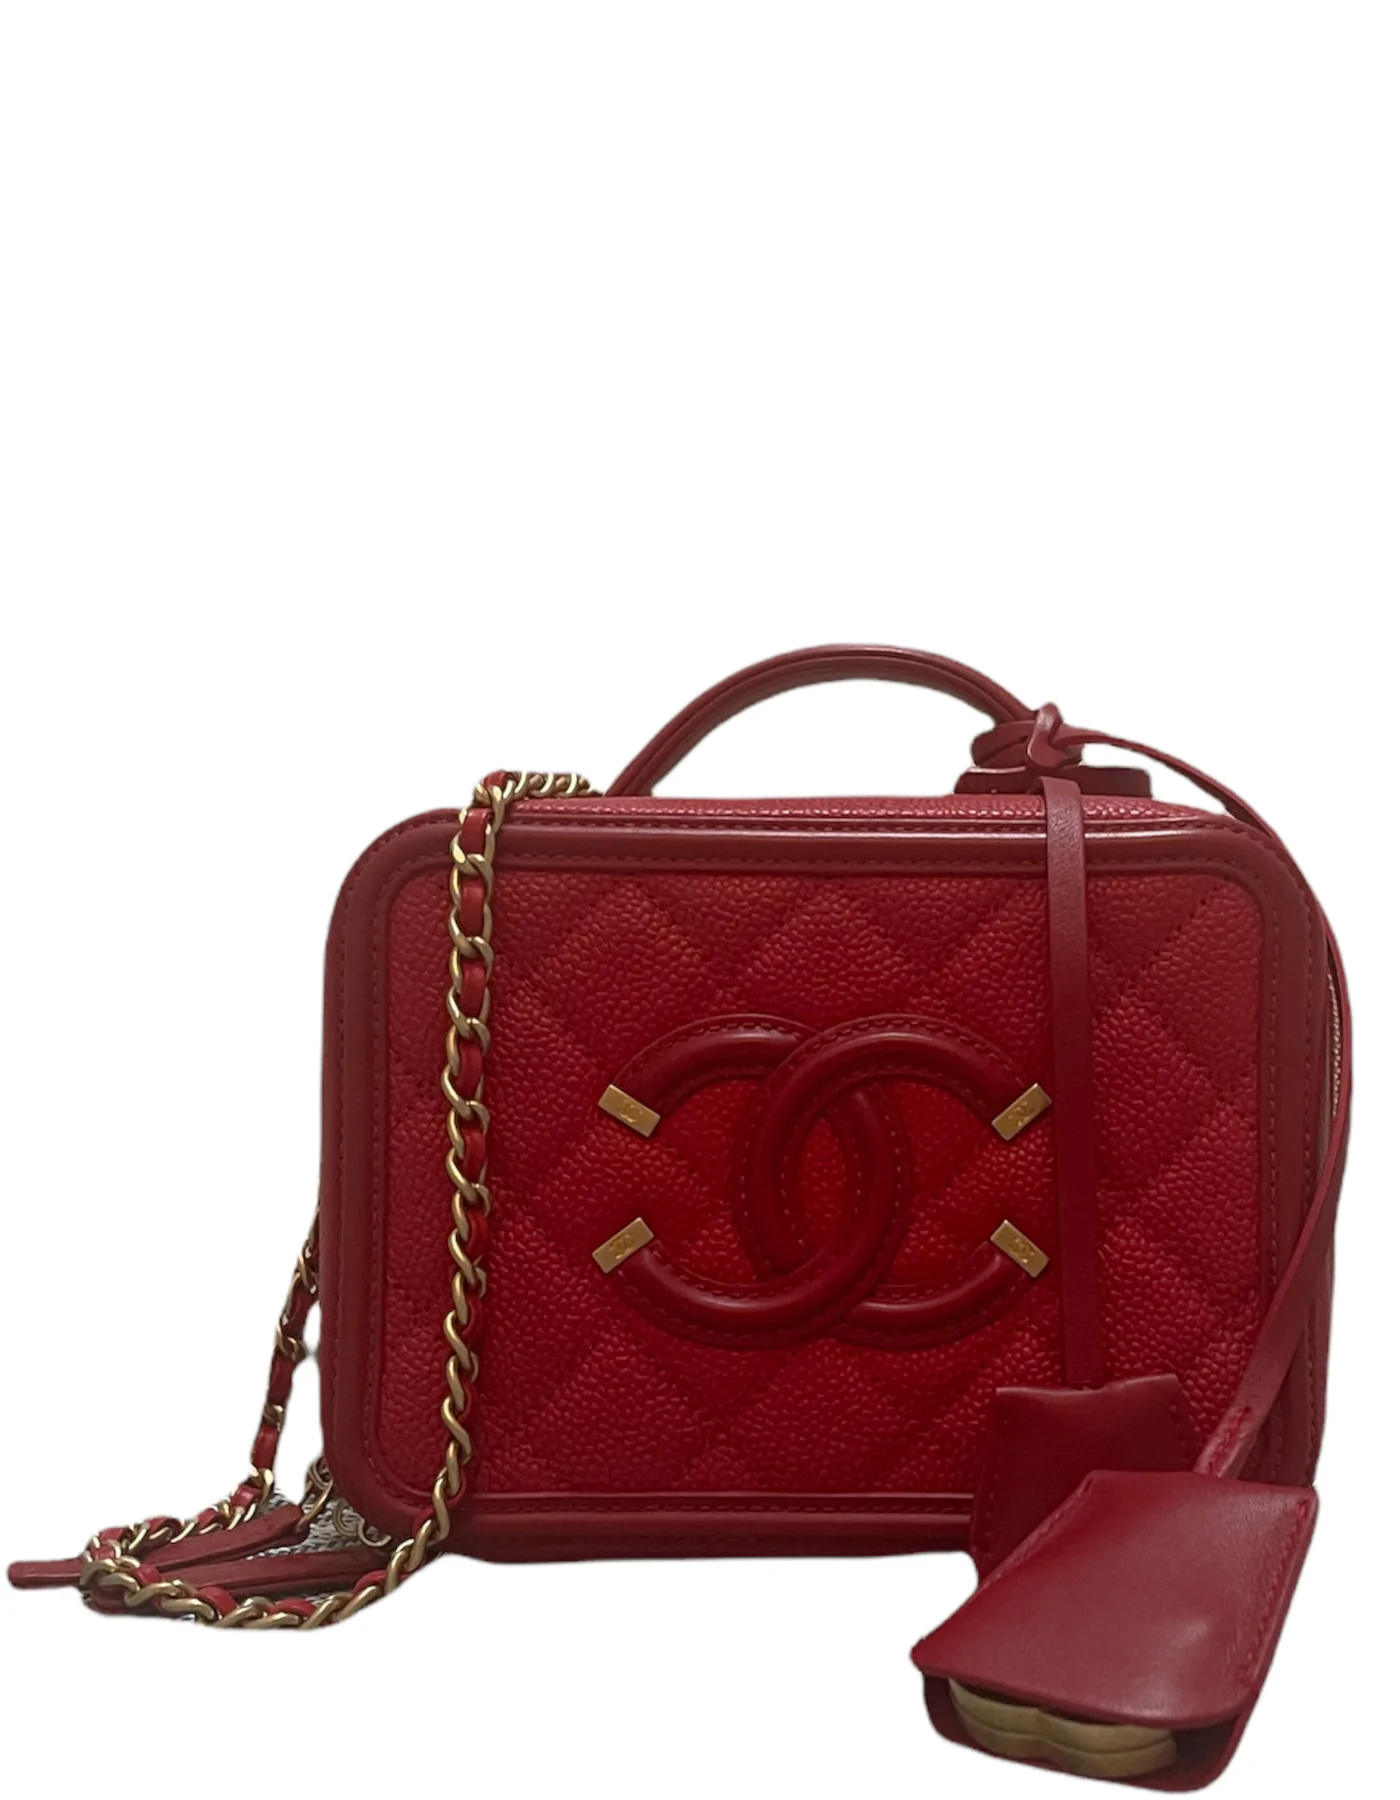 Chanel Red Caviar Small Crossbody Bag